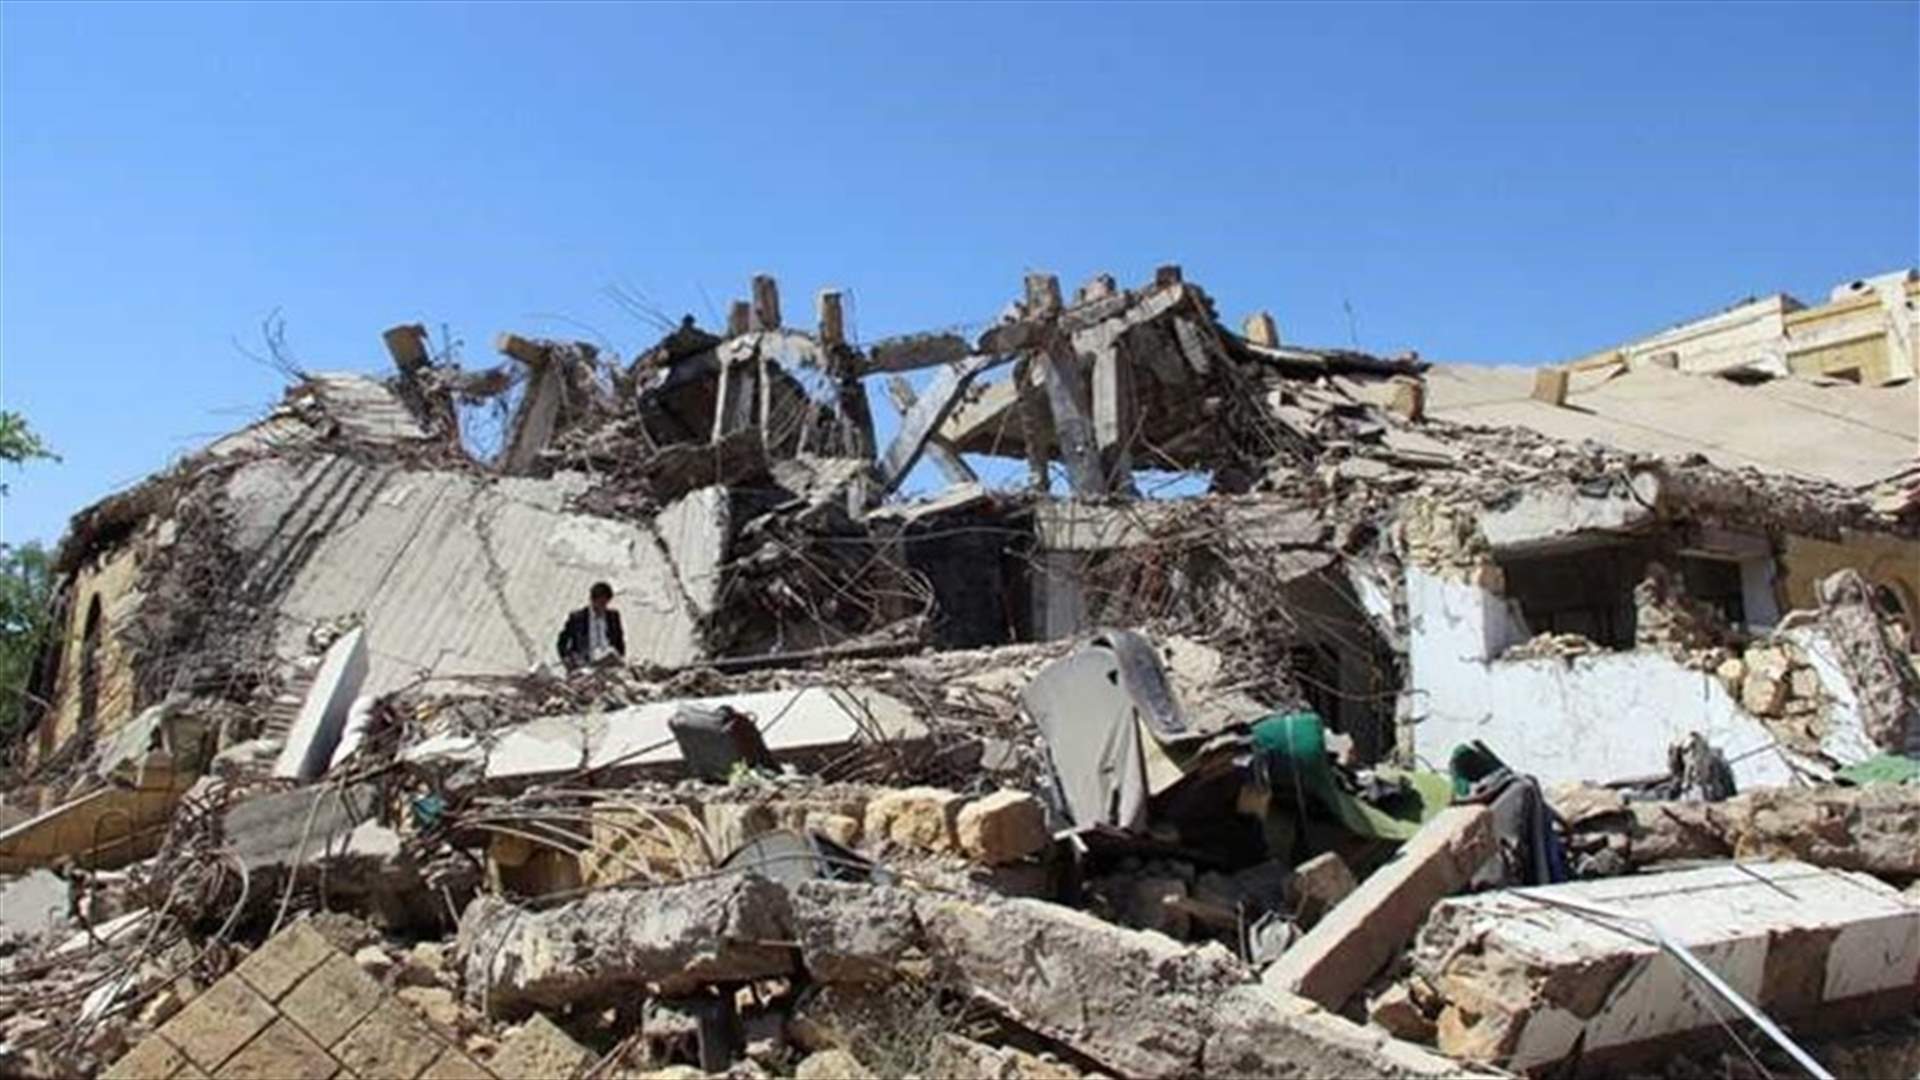 UN announces agreement on 72-hour Yemen cease-fire